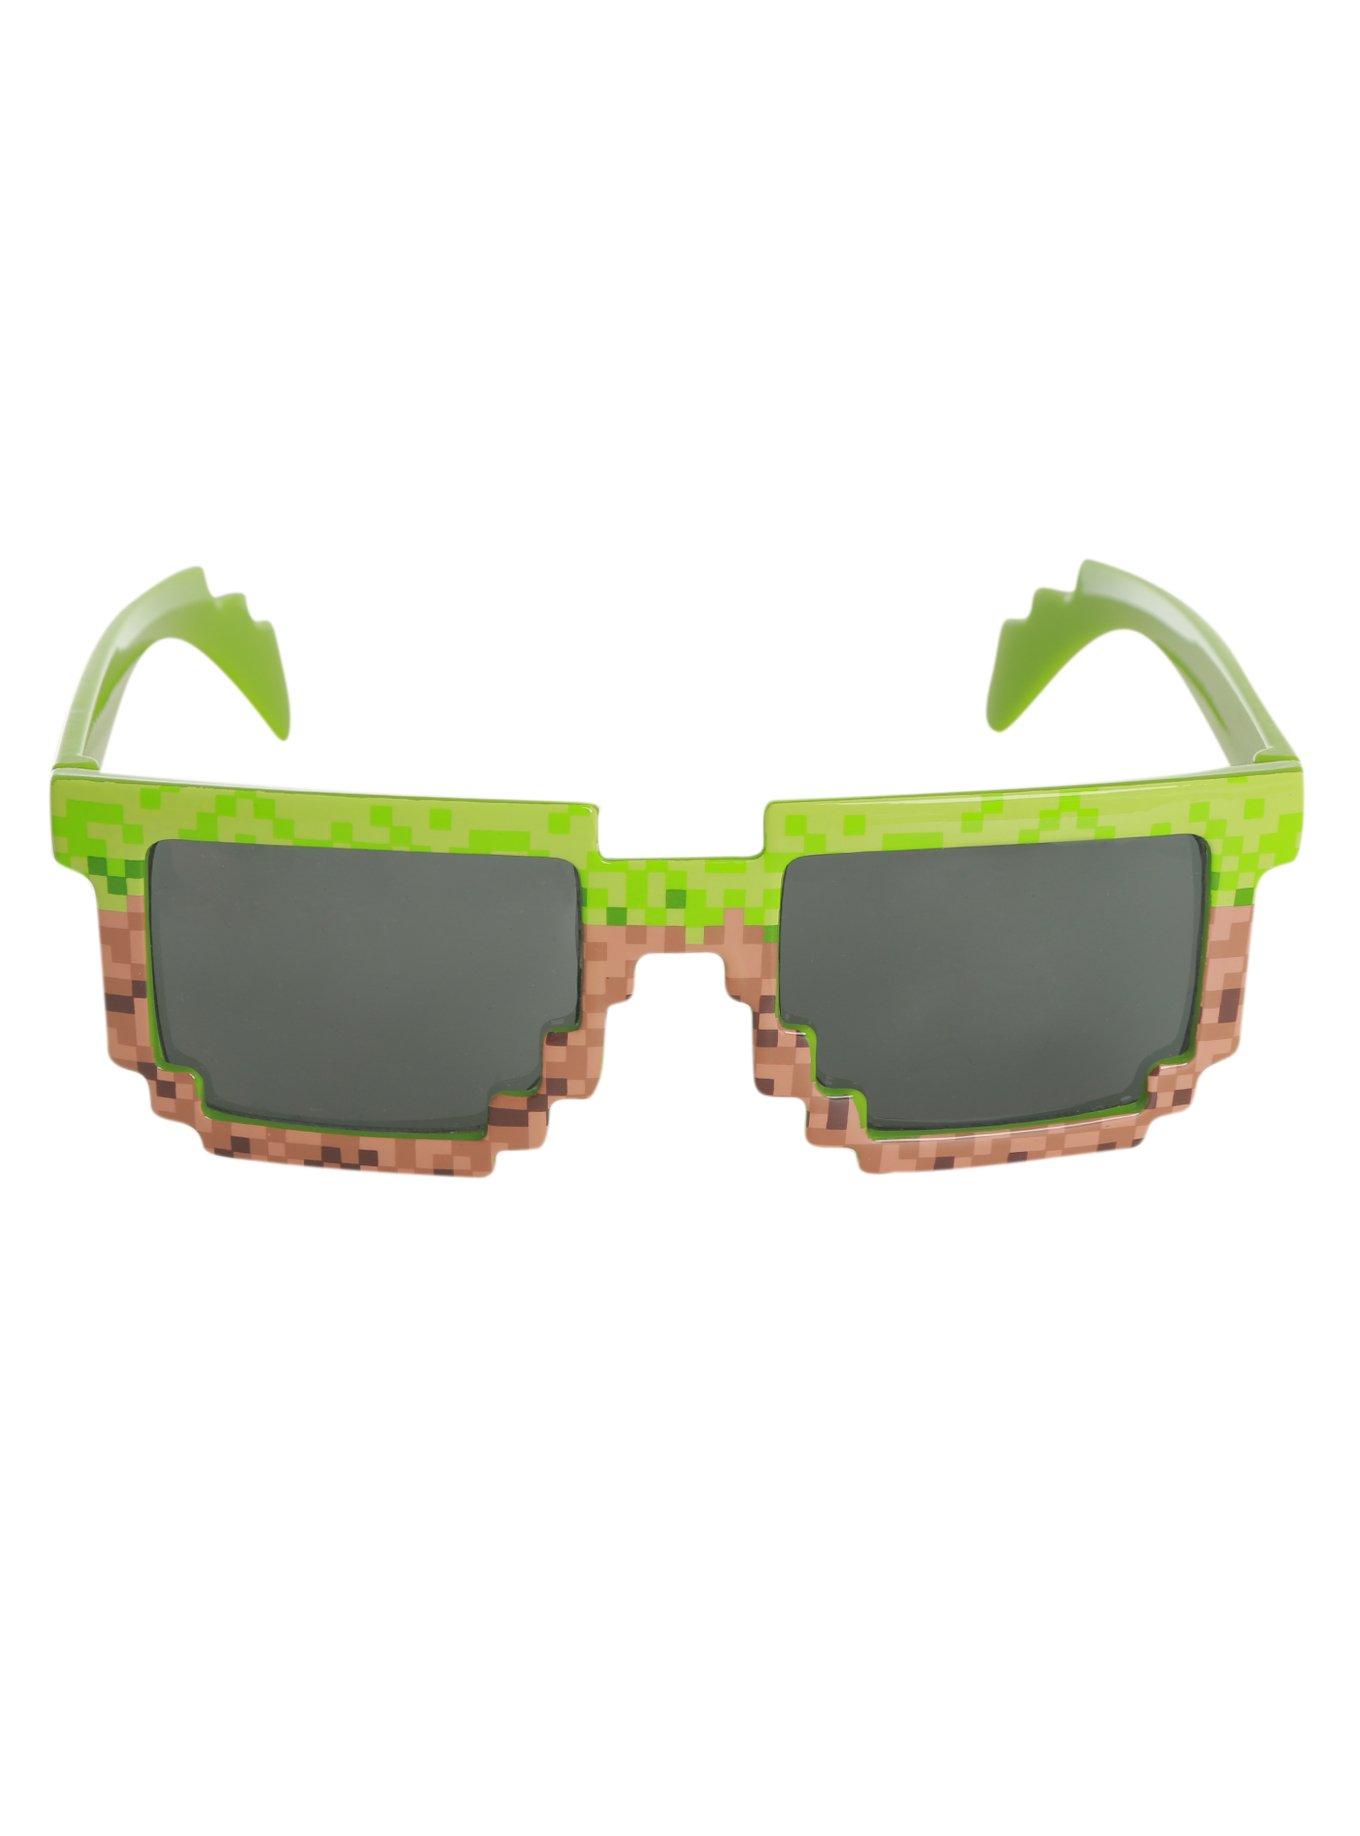 Pixel-8 Green & Brown Sunglasses, , alternate